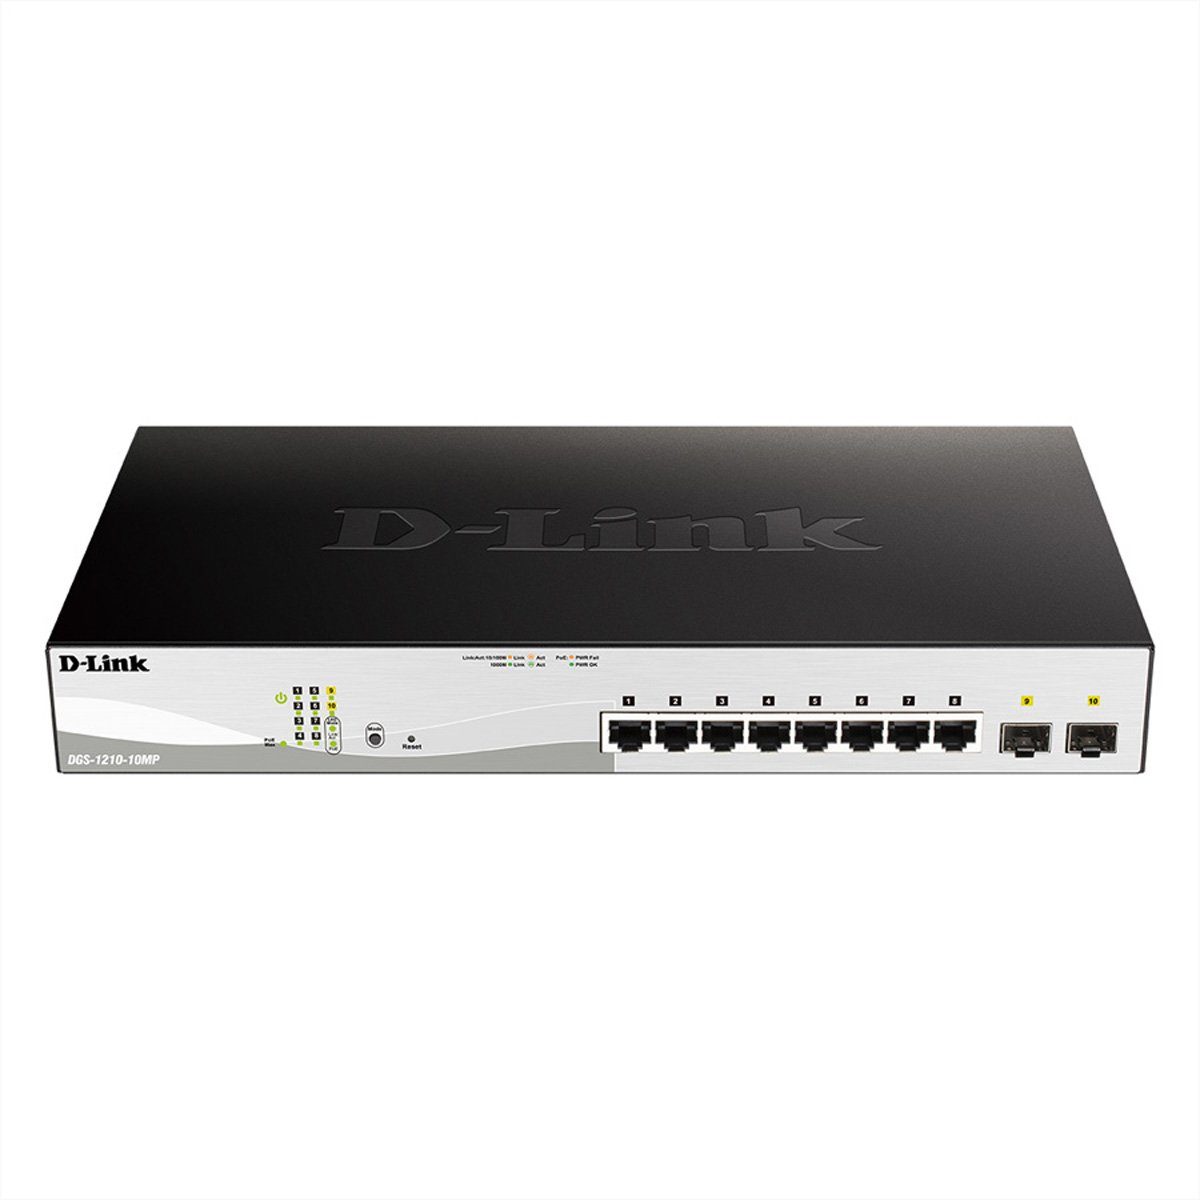 D-Link Layer2 DGS-1210-10MP Smart Netzwerk-Switch PoE+ 10-Port Switch Gigabit Managed